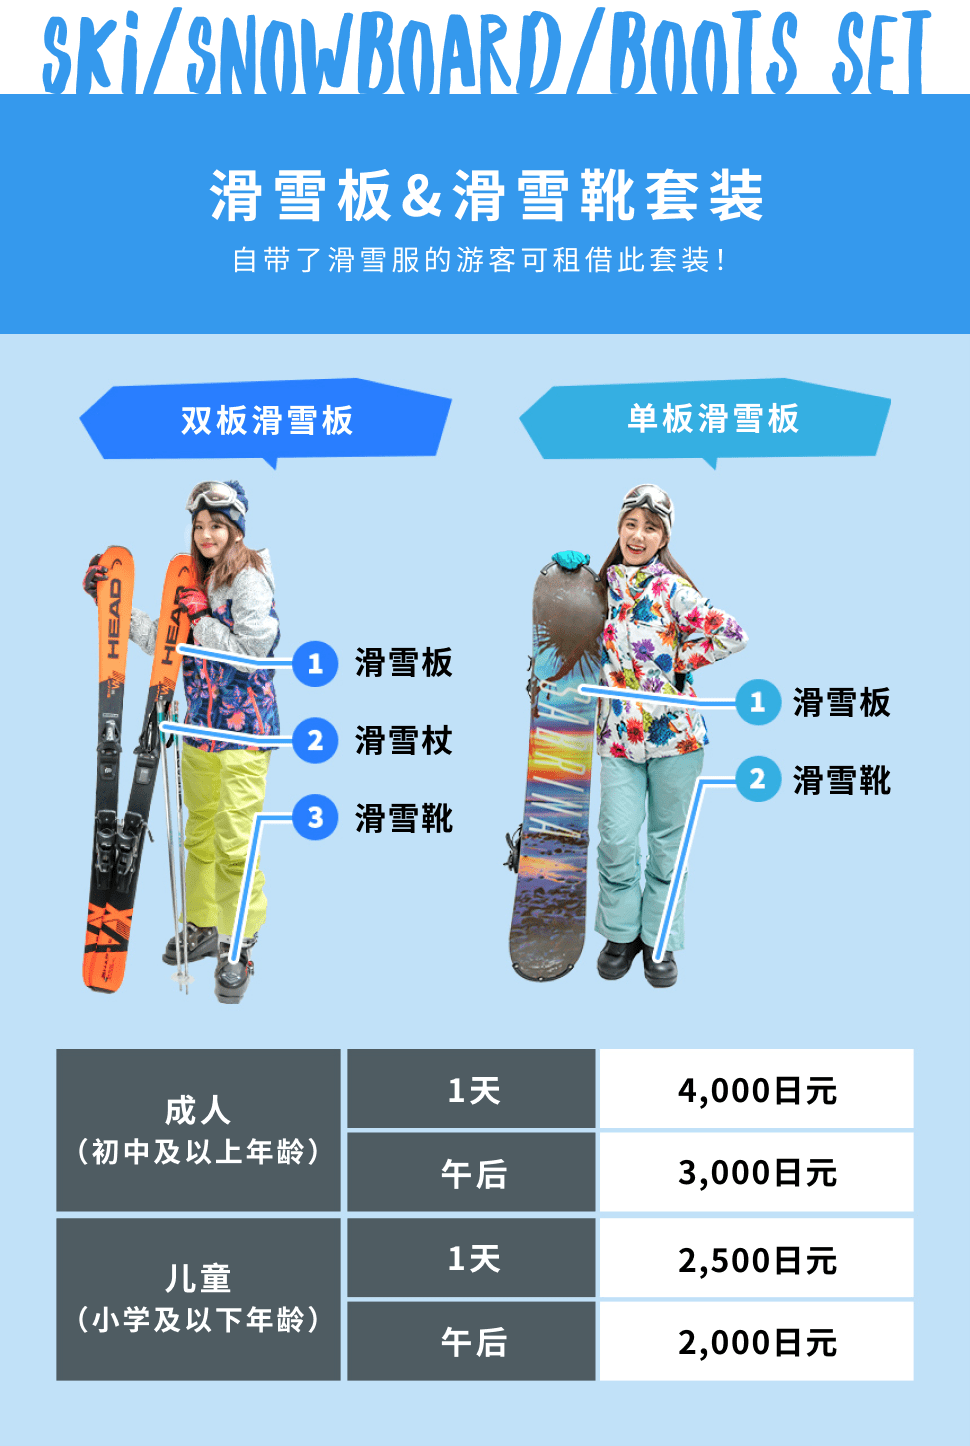 SKI/SNOWBOARD/BOOTS SET